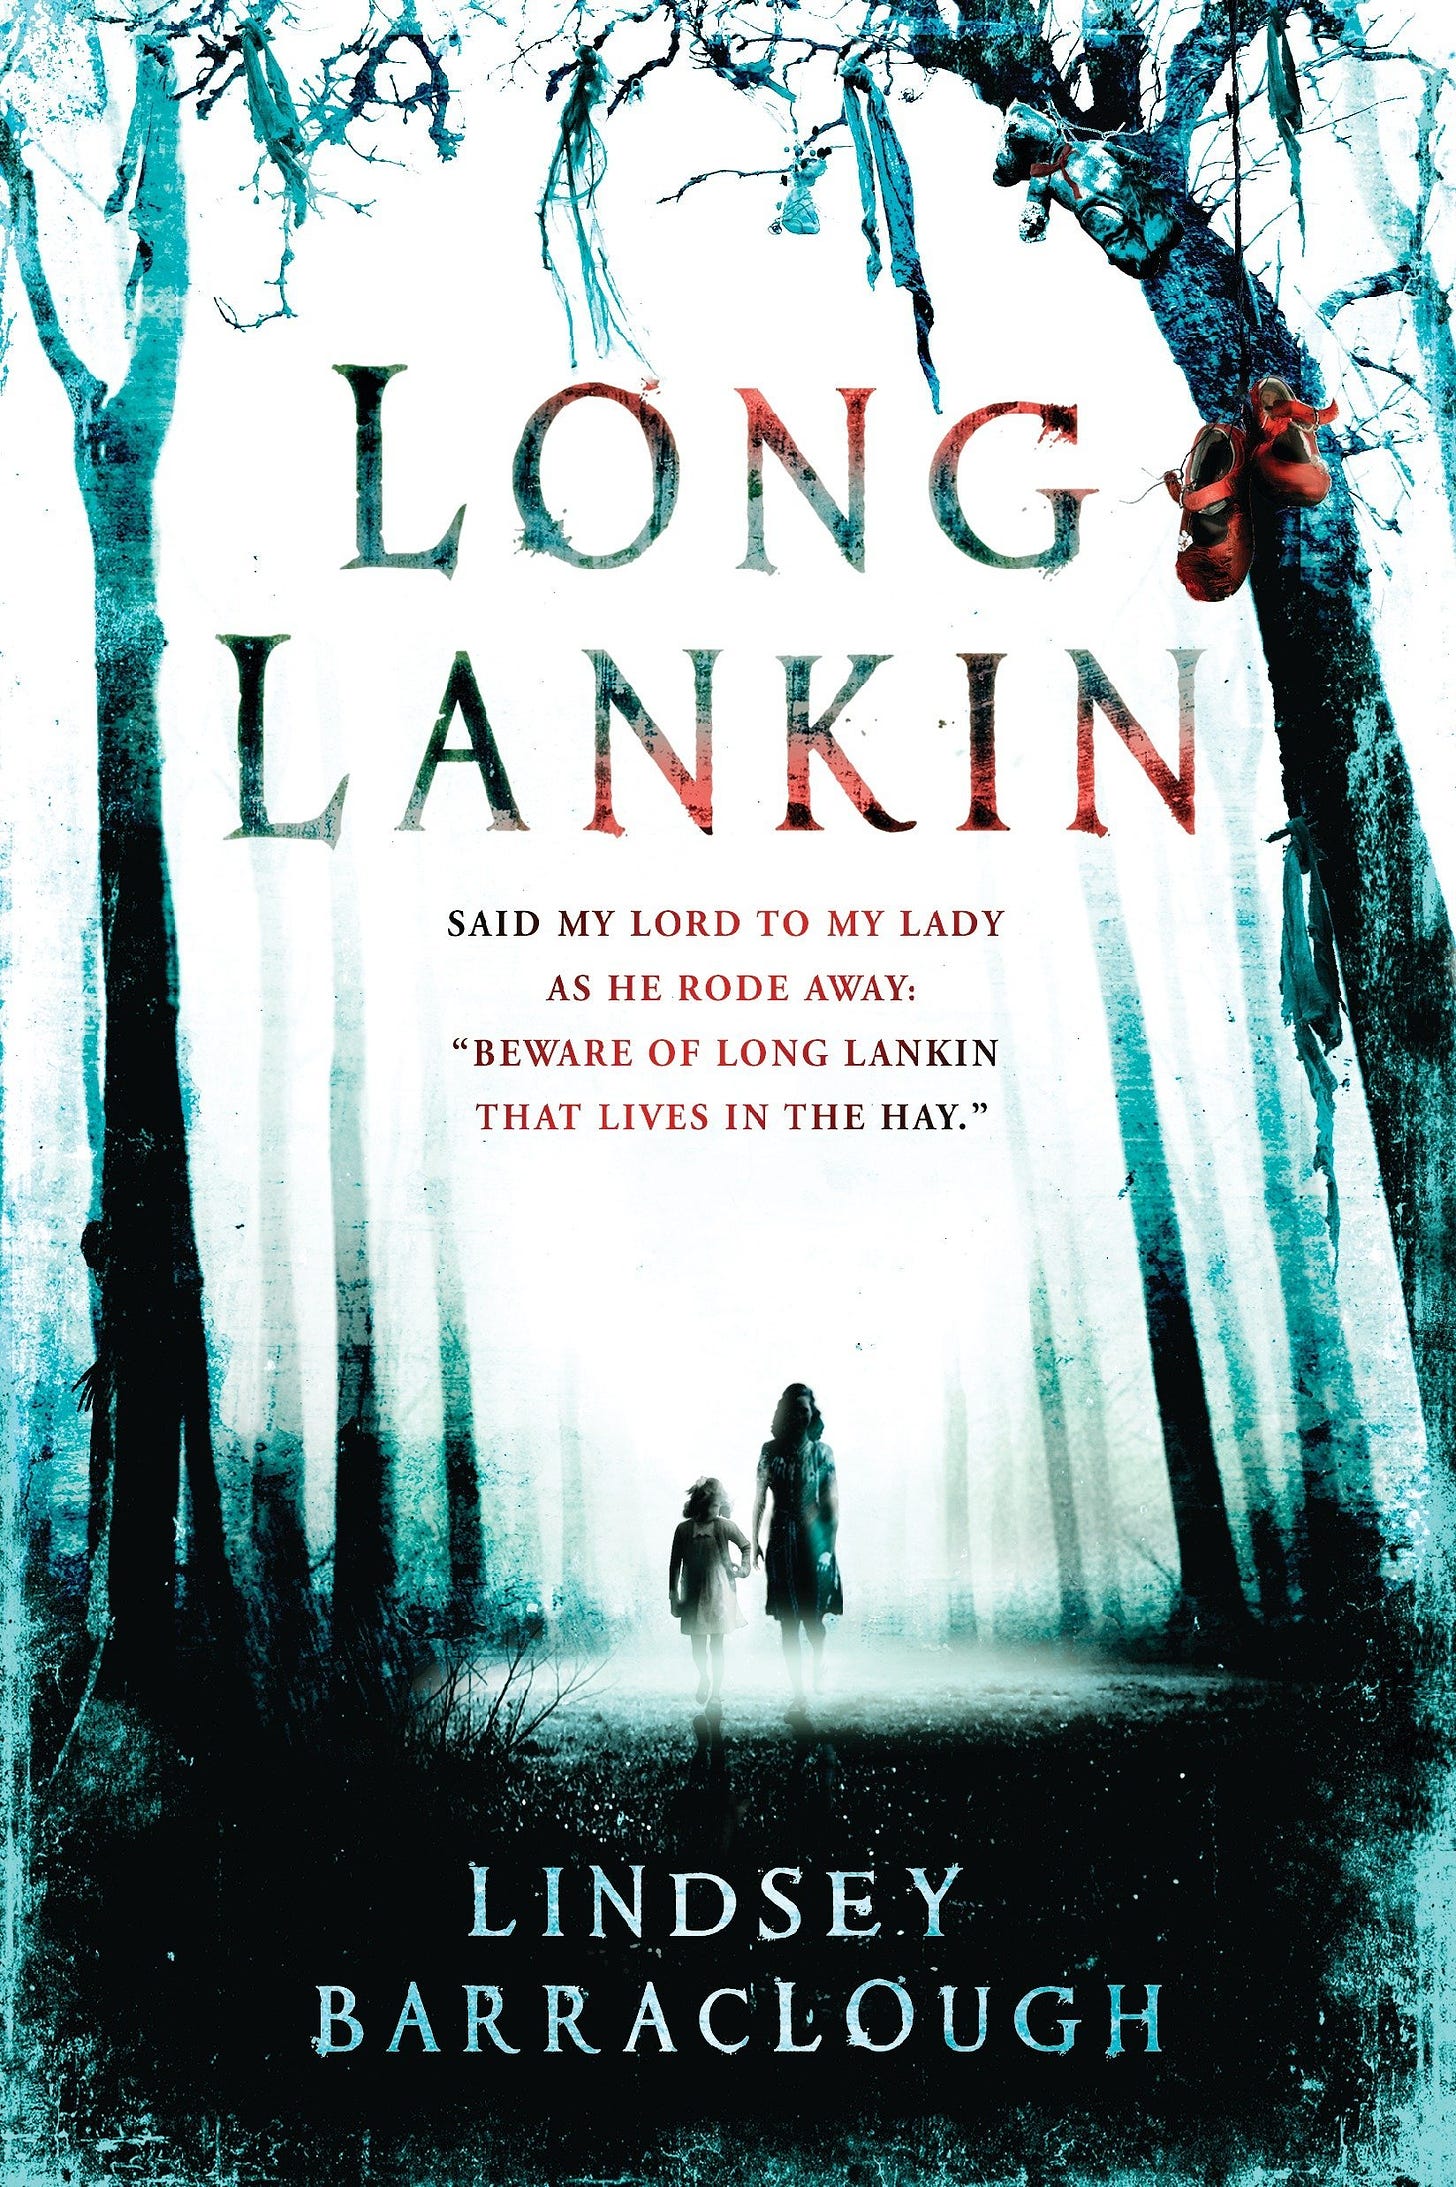 Amazon.com: Long Lankin: 9780763669379: Barraclough, Lindsey: Books